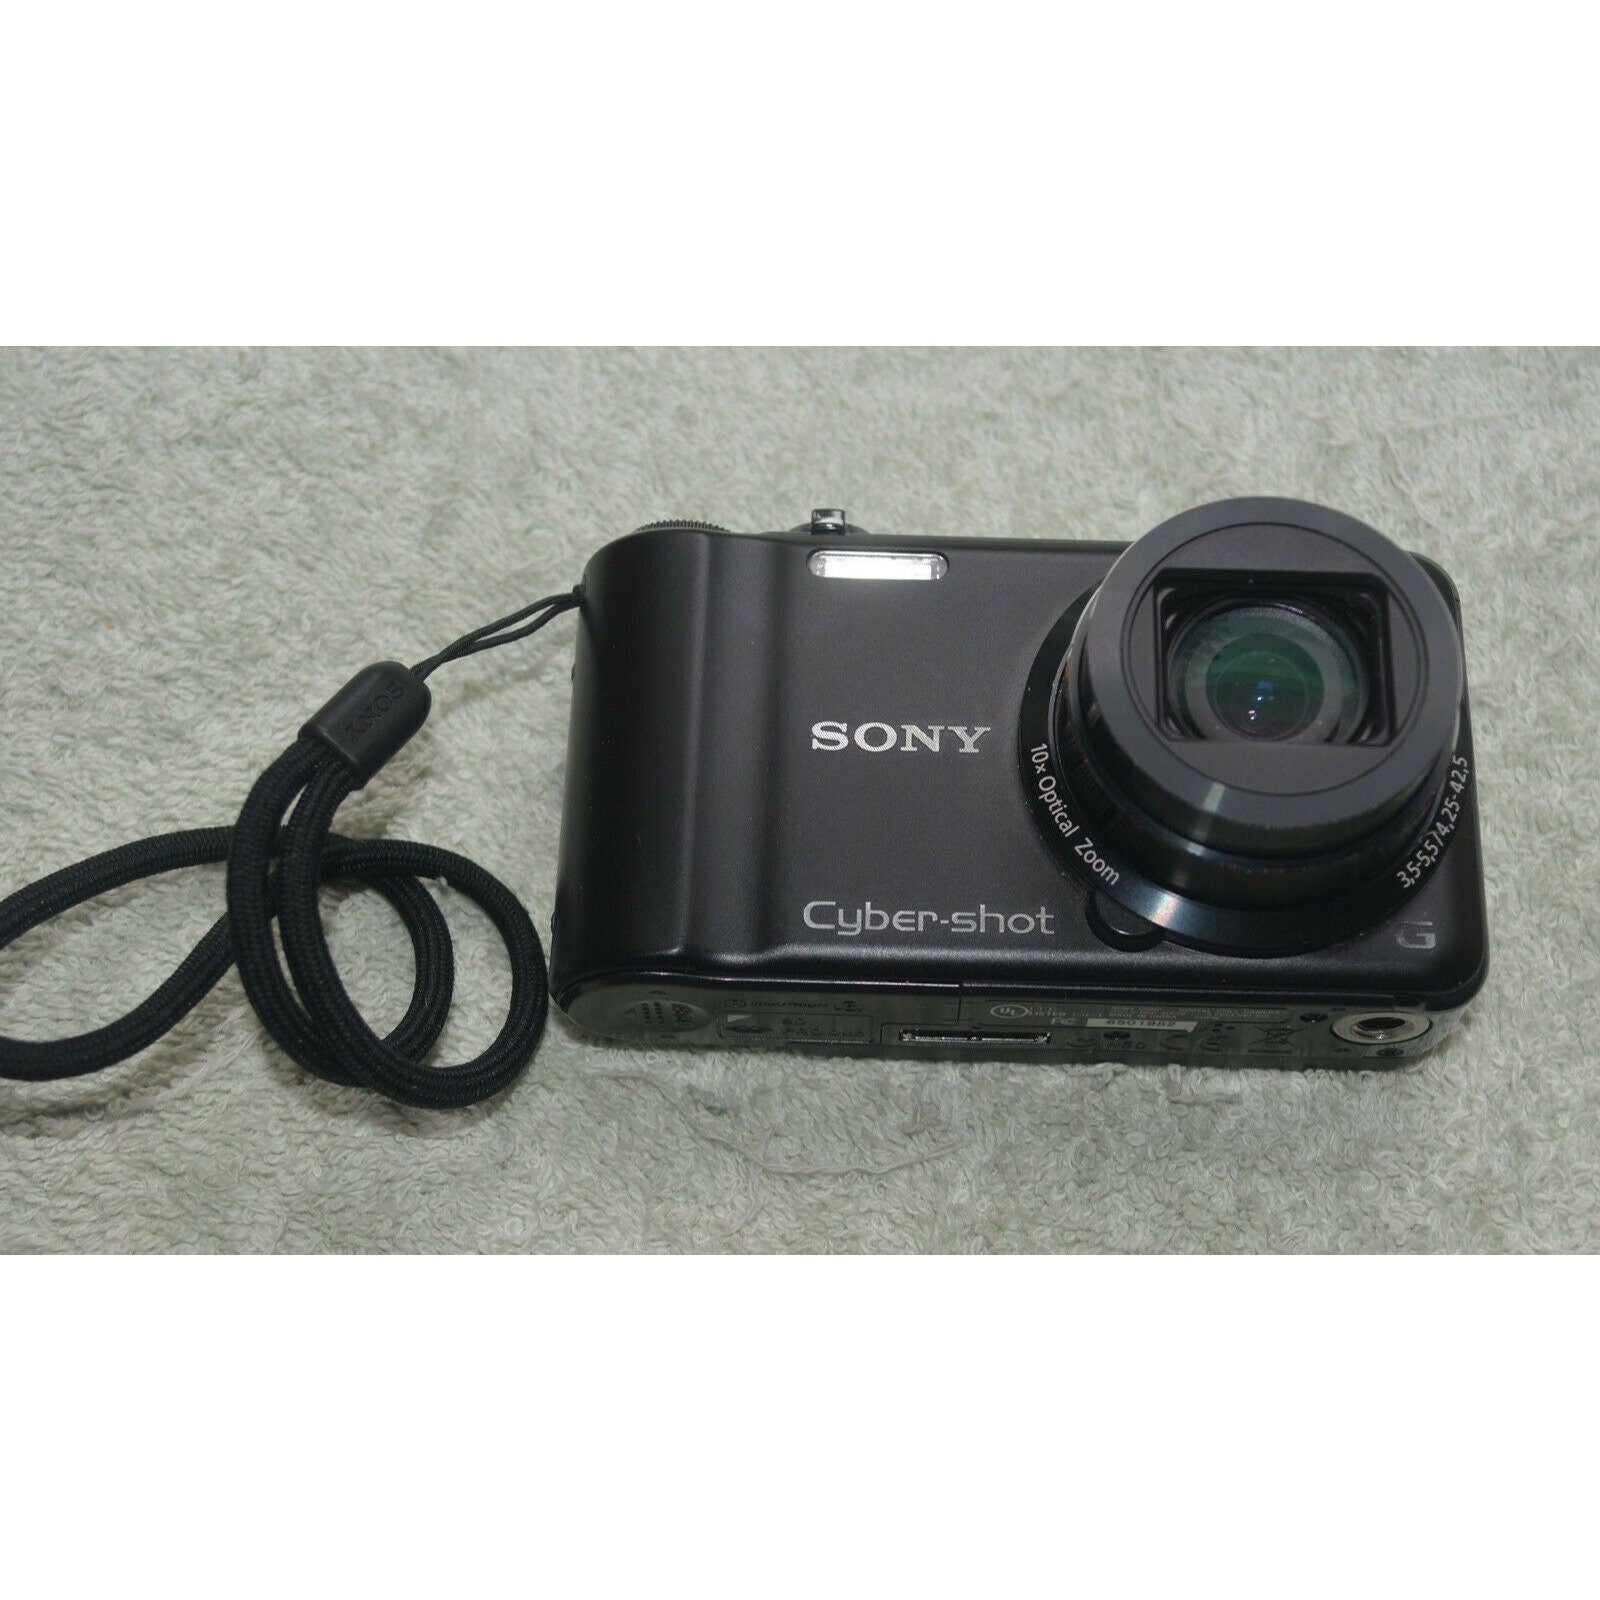 Sony Cyber-shot DSC-HX5V 10.2MP Pocket Size Digital Camera - Black